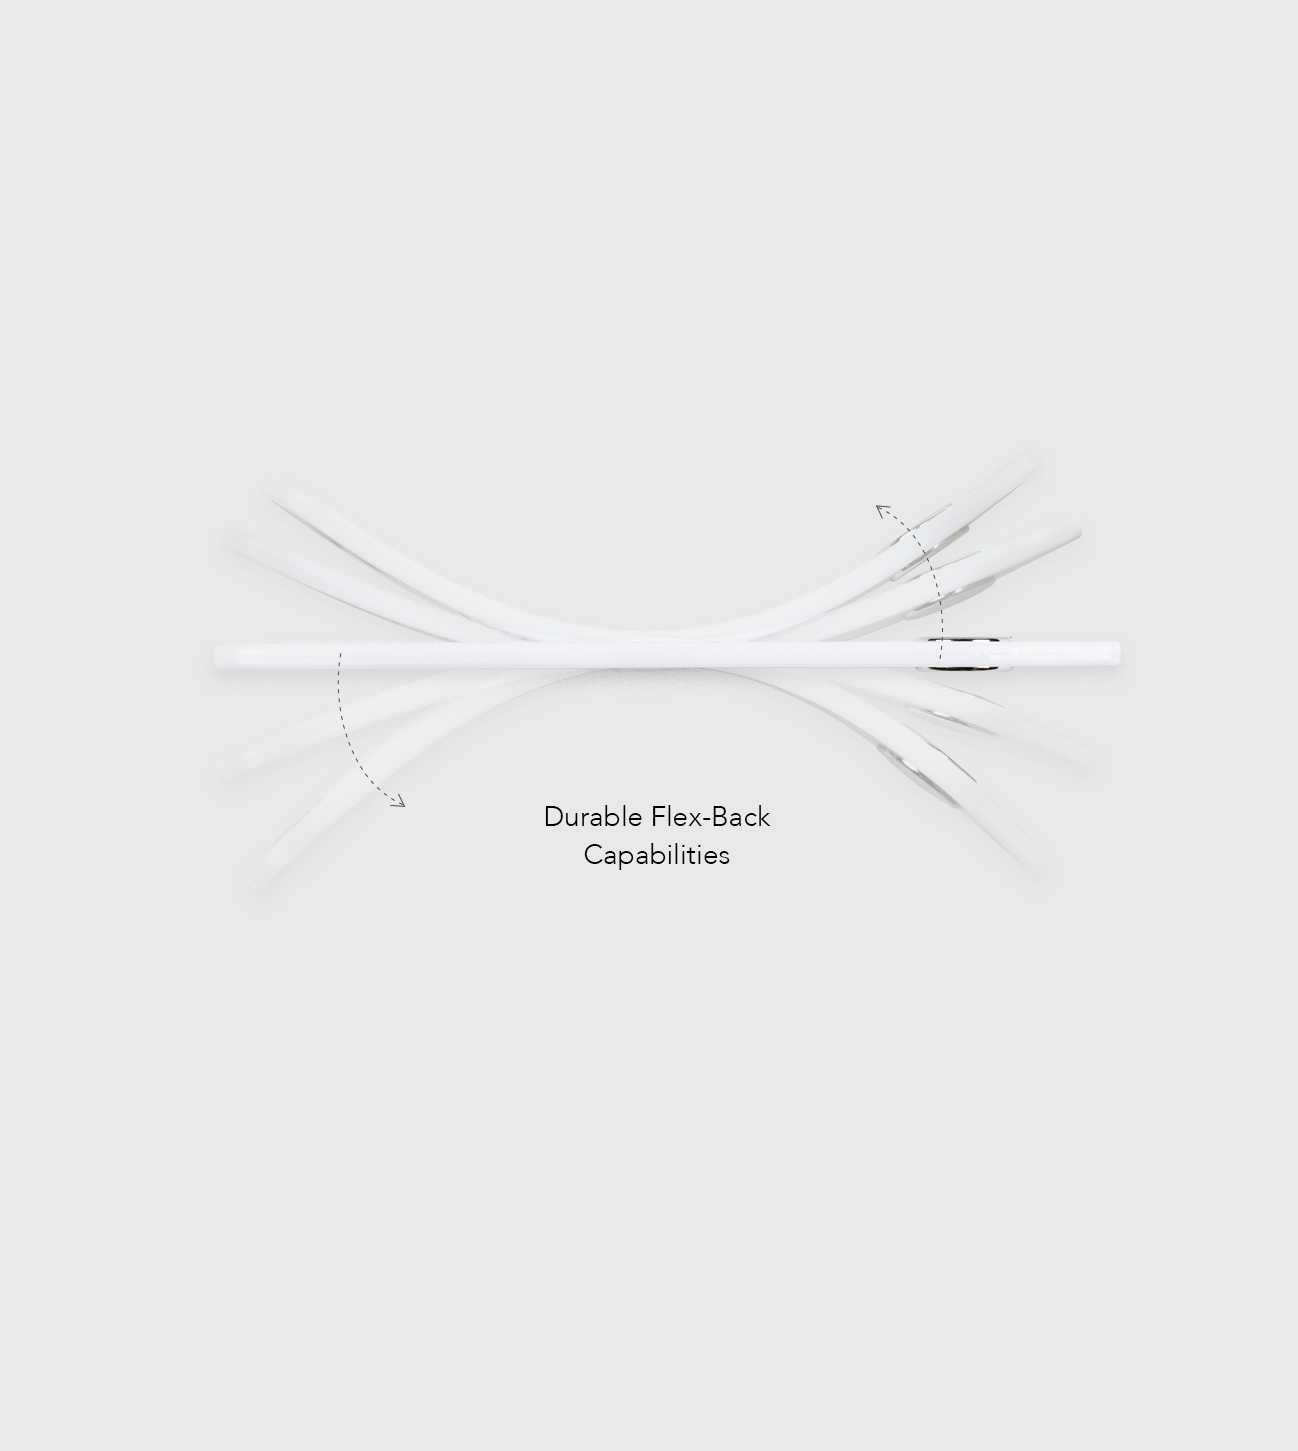 Standard Recommendations – Wurkin Stiffs – Magnetic Collar Stays